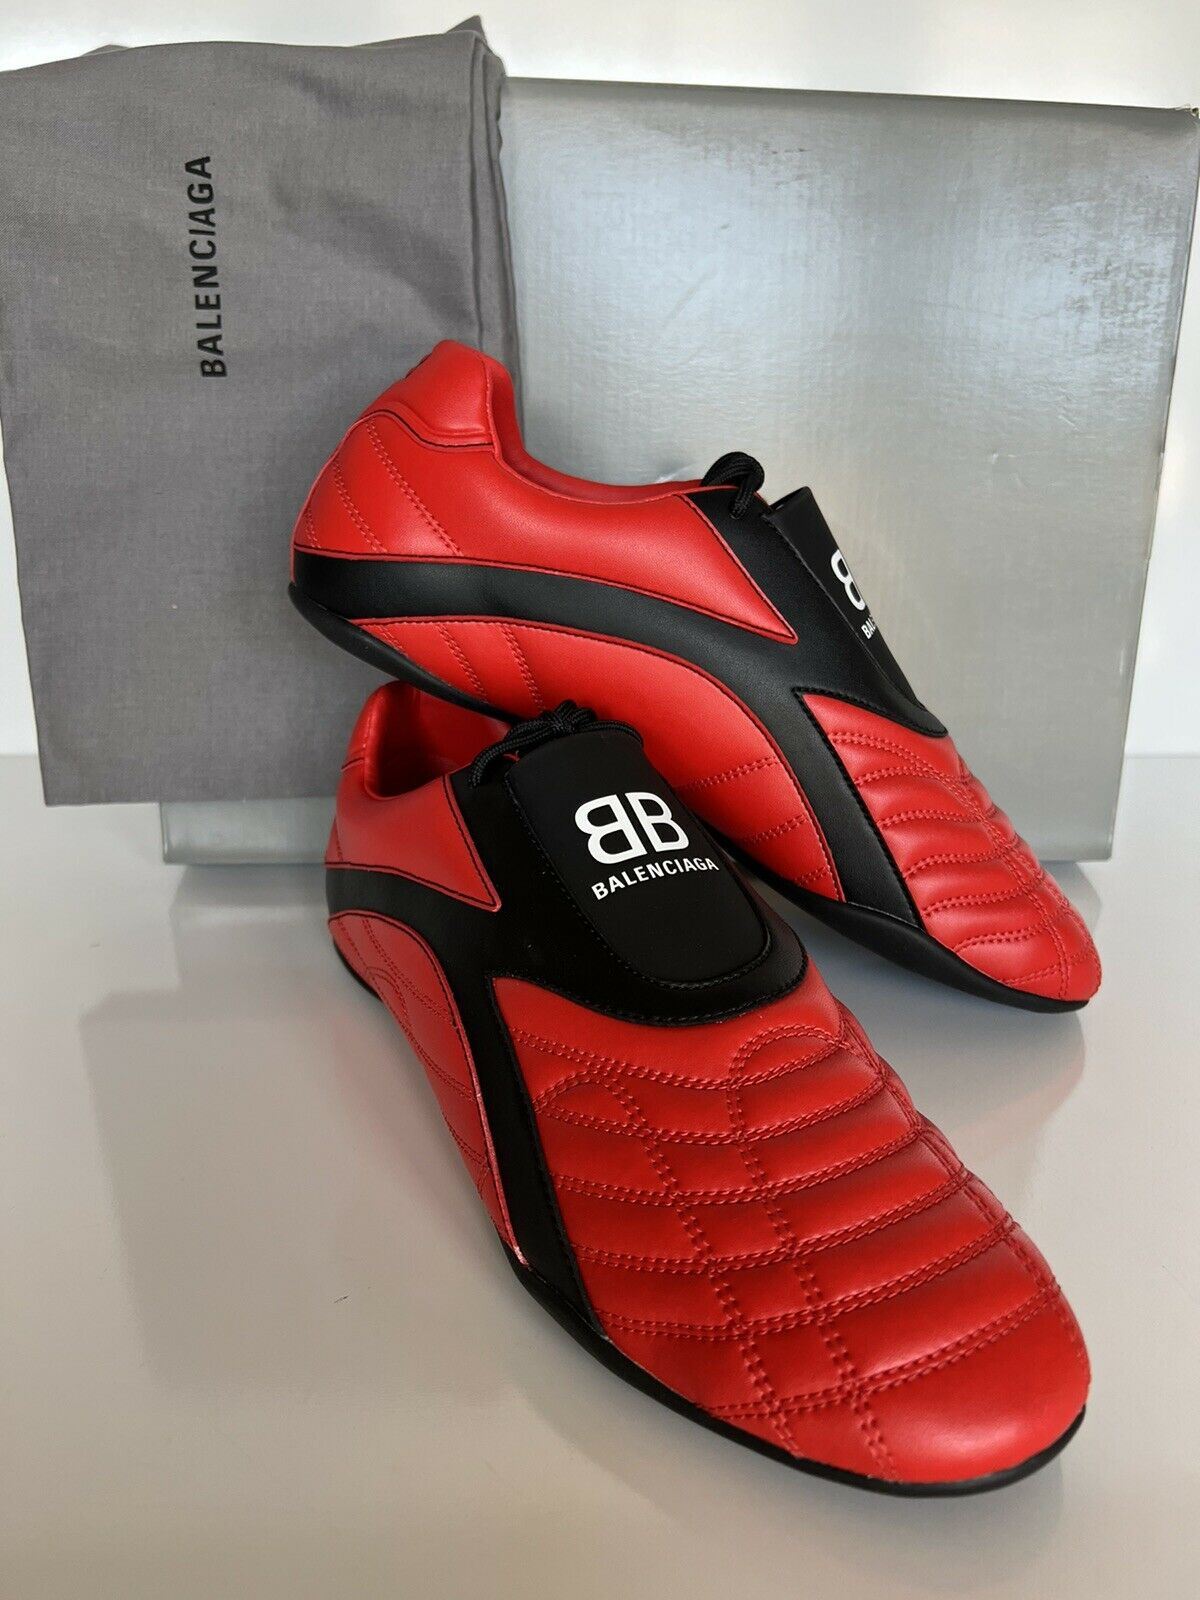 NIB $550 Balenciaga Men's Red/Black Zen Sneakers 10 US (43 Euro) 617540